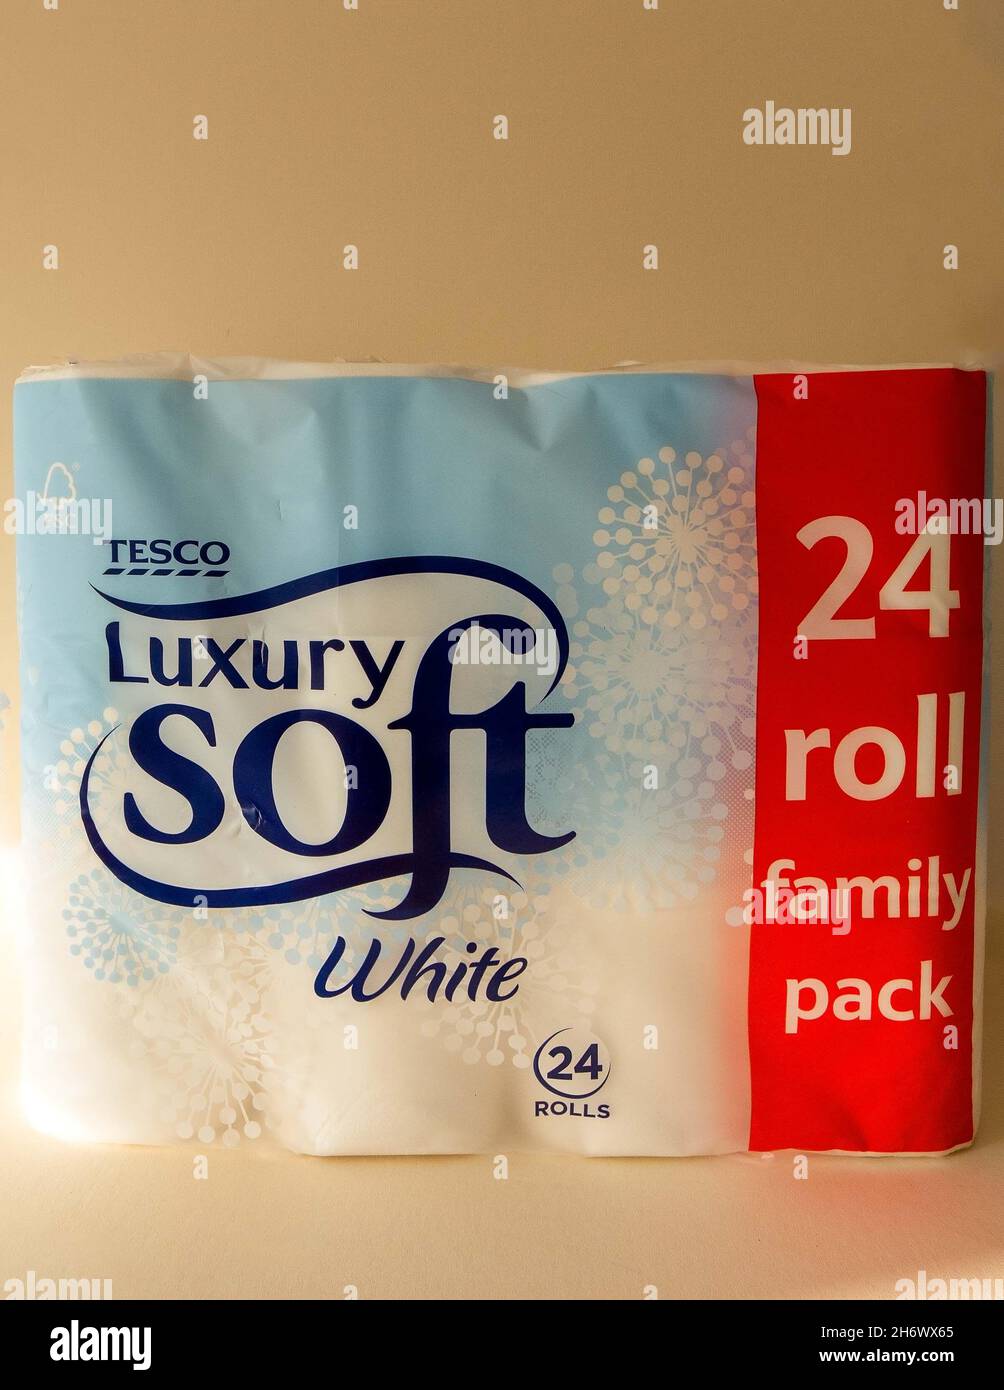 Family pack of 24 Tesco toilet rolls Stock Photo - Alamy